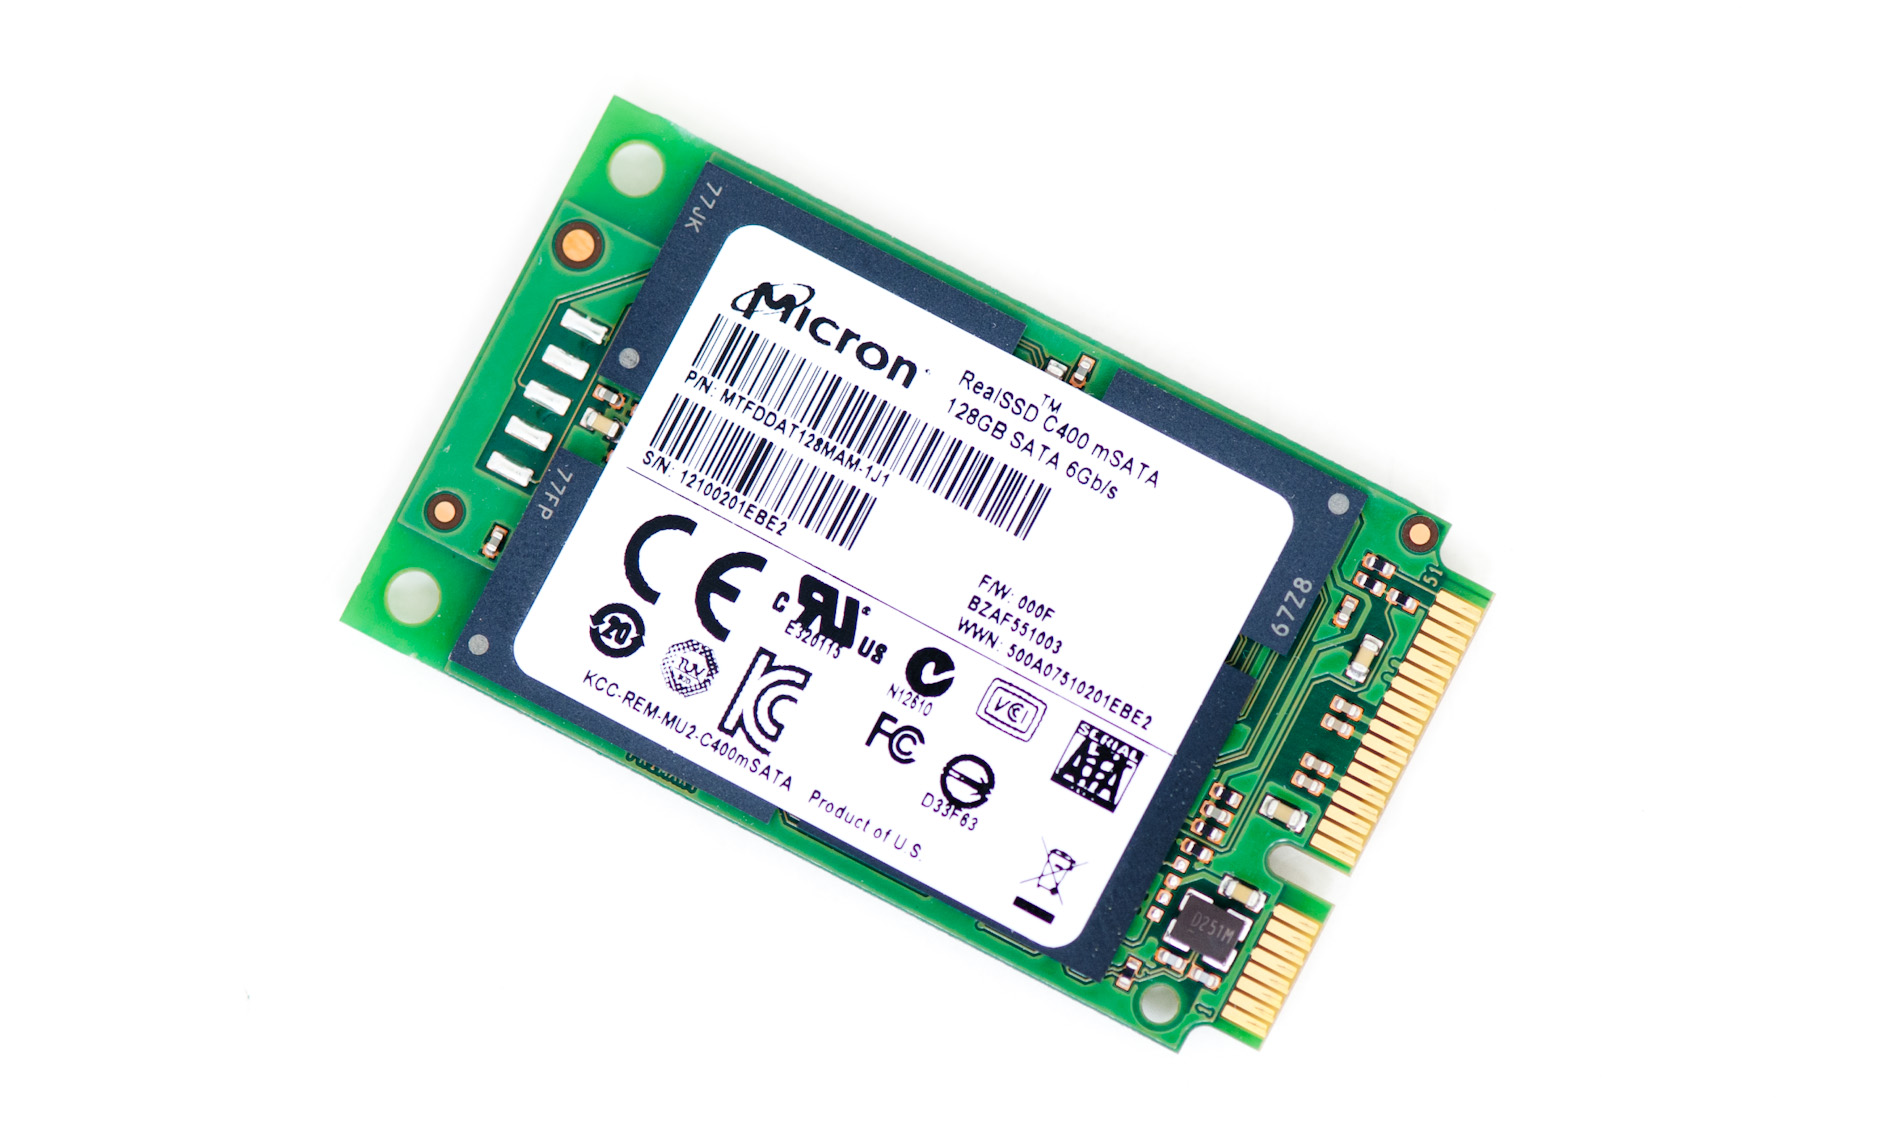 Micron C400 mSATA (128GB) SSD Review